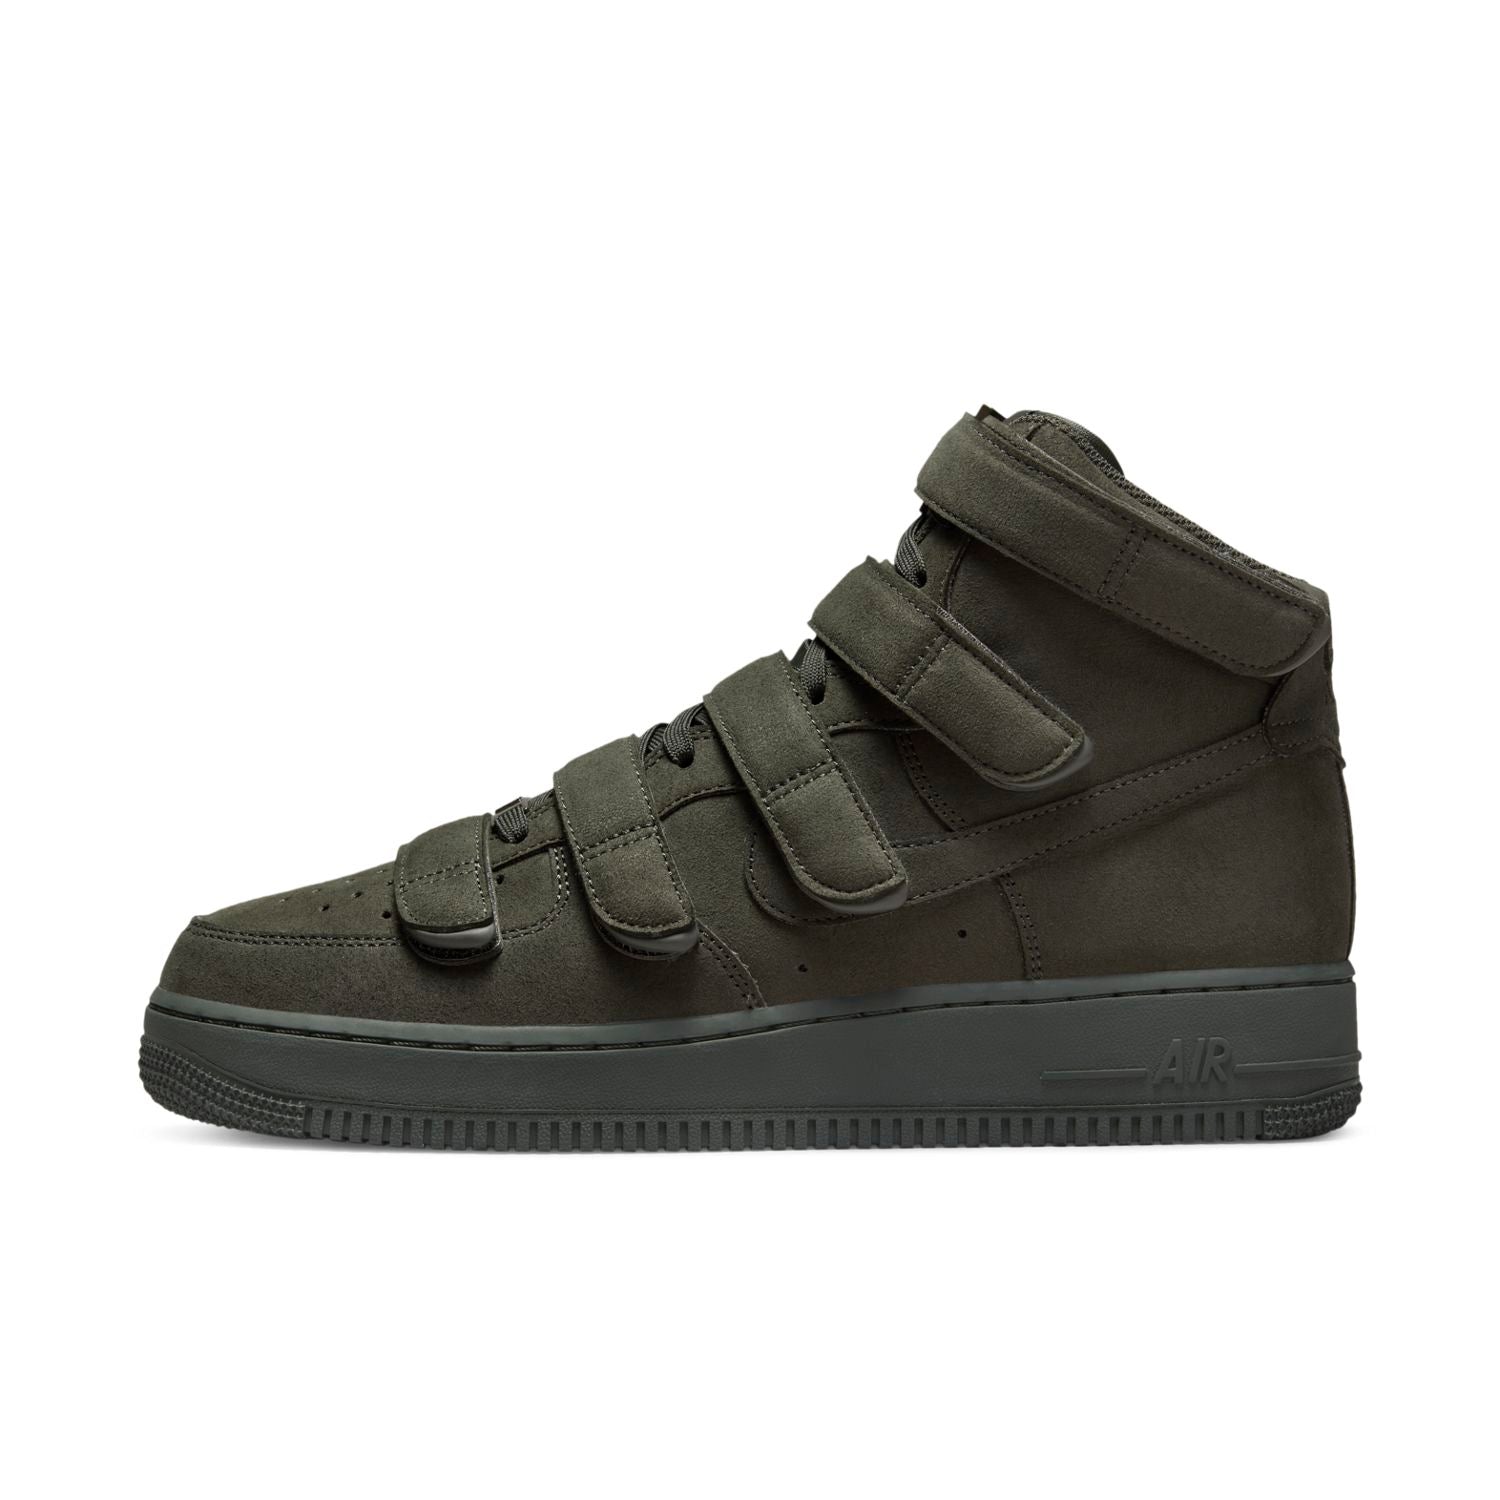 Nike Air Force 1 High '07 Shoes Retro White Black Strap CT2303-100 Mens Size